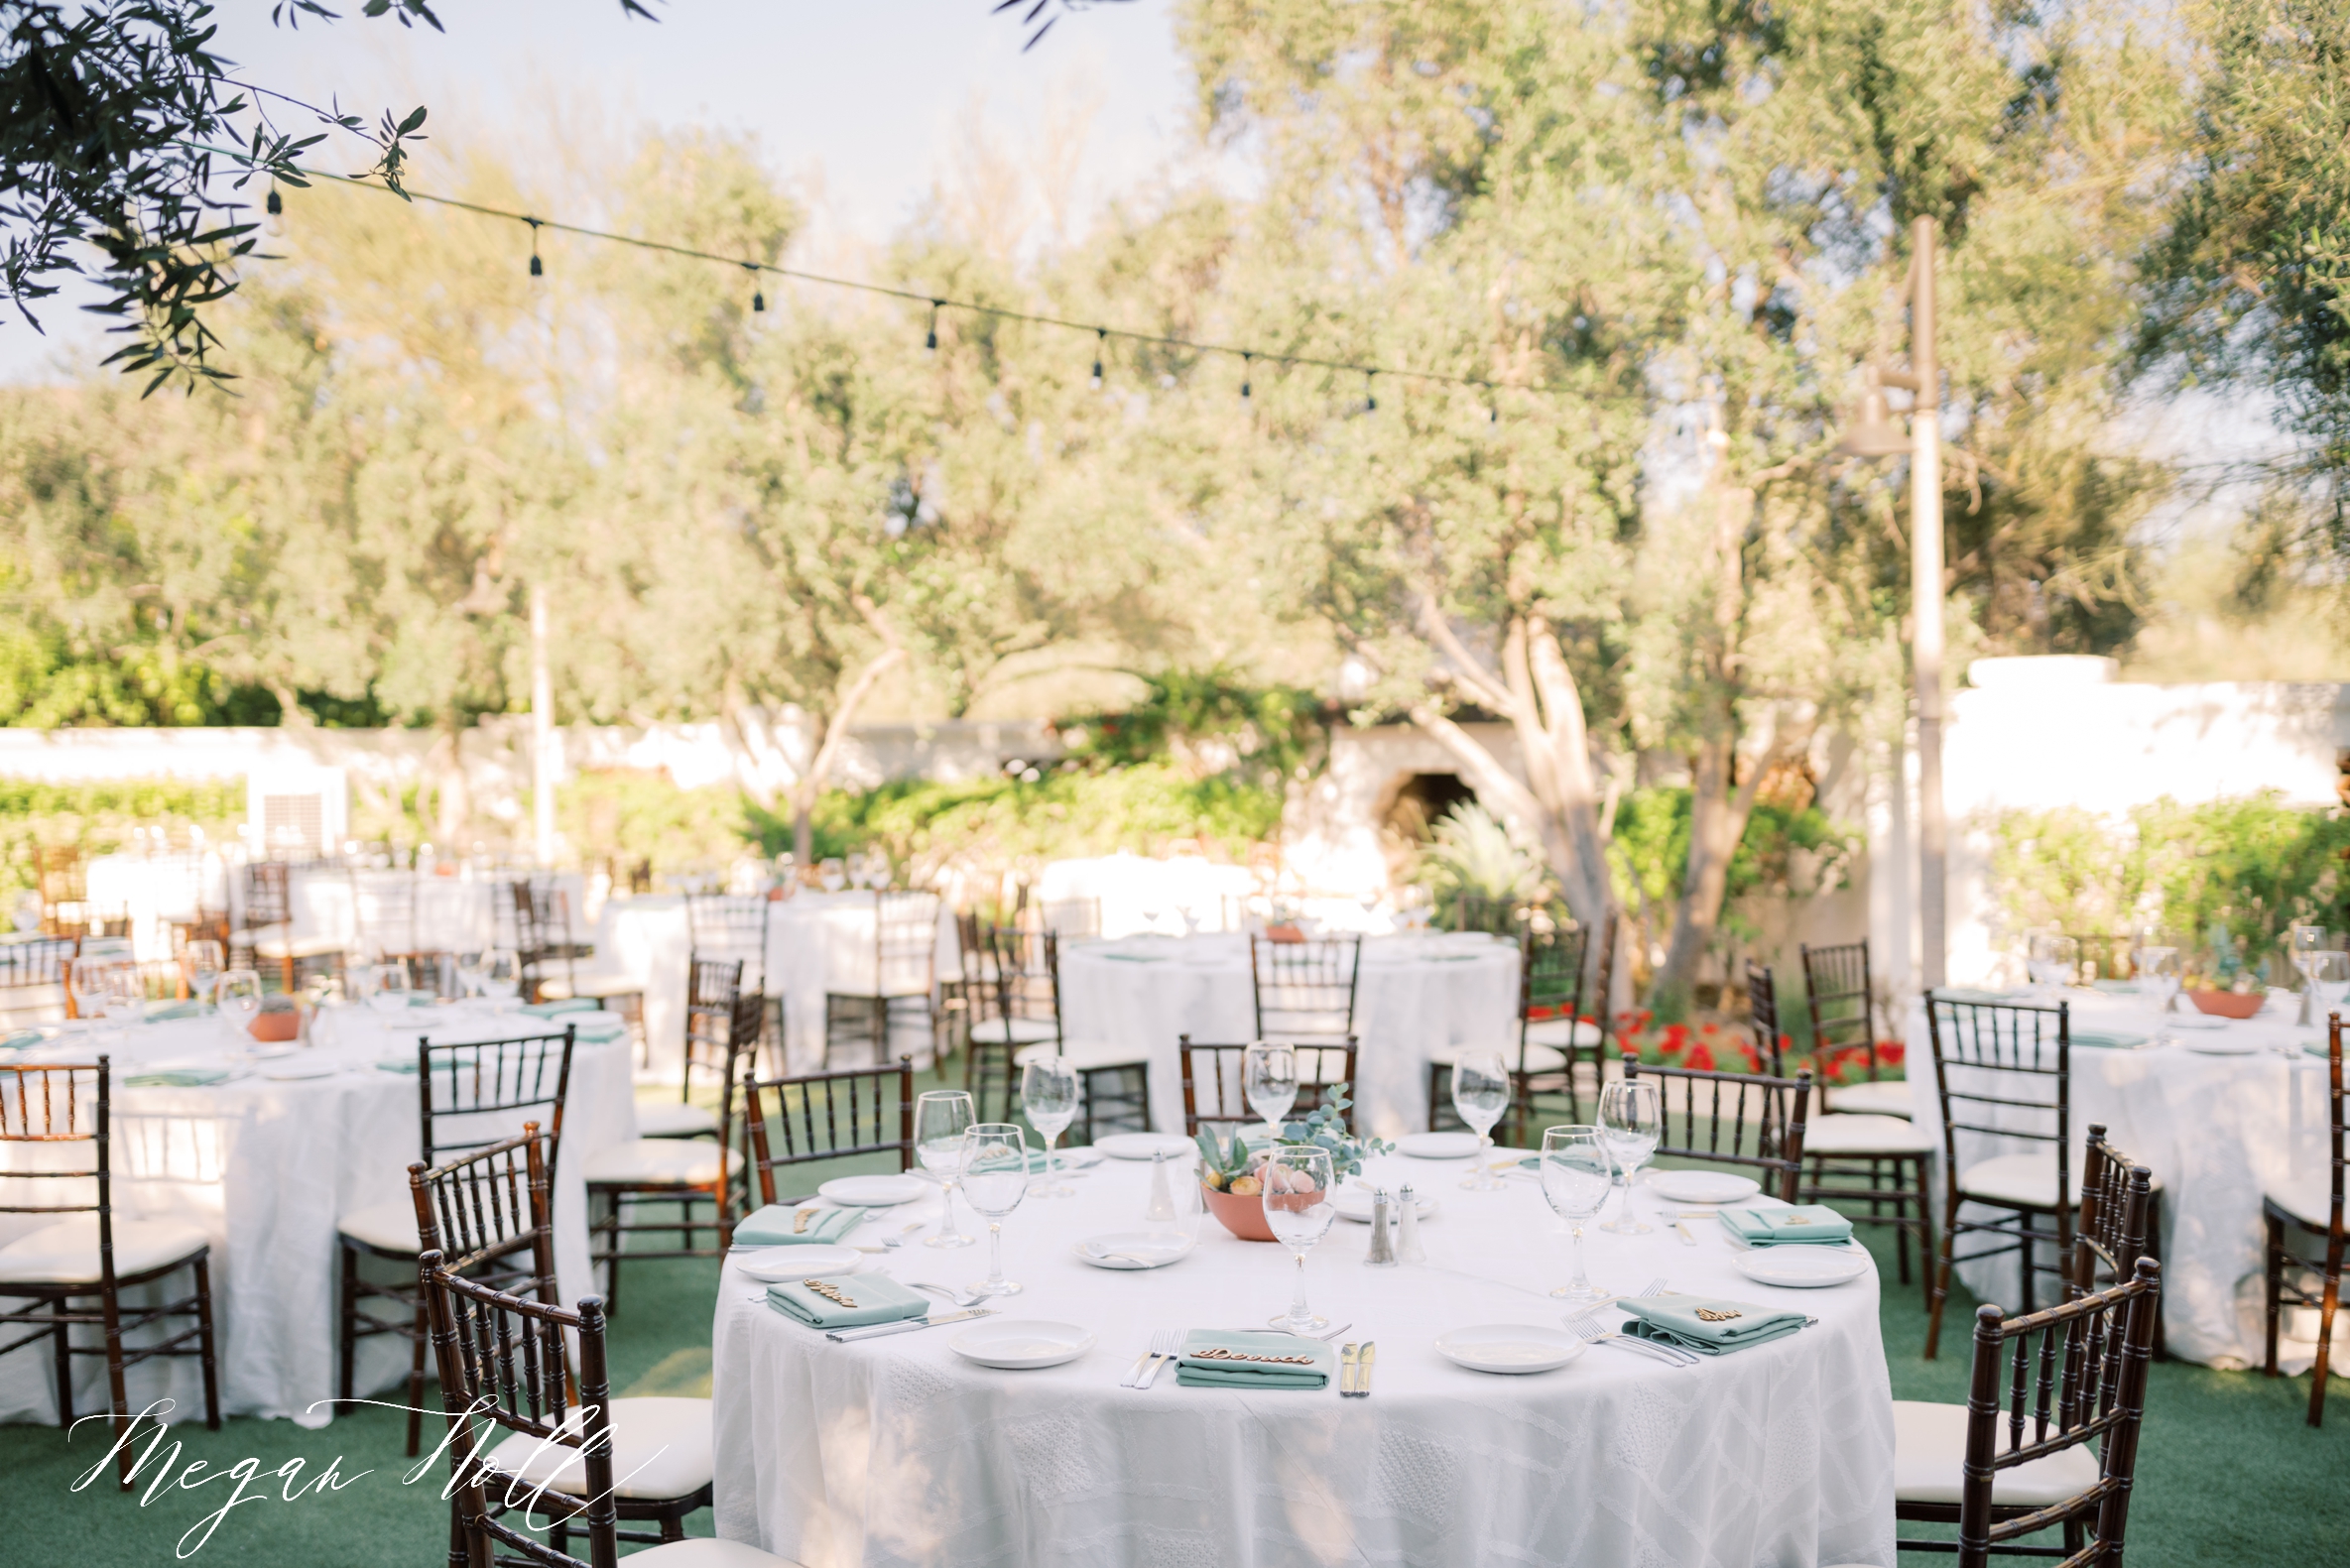 Outdoor Reception set up for El Chorro Wedding in October